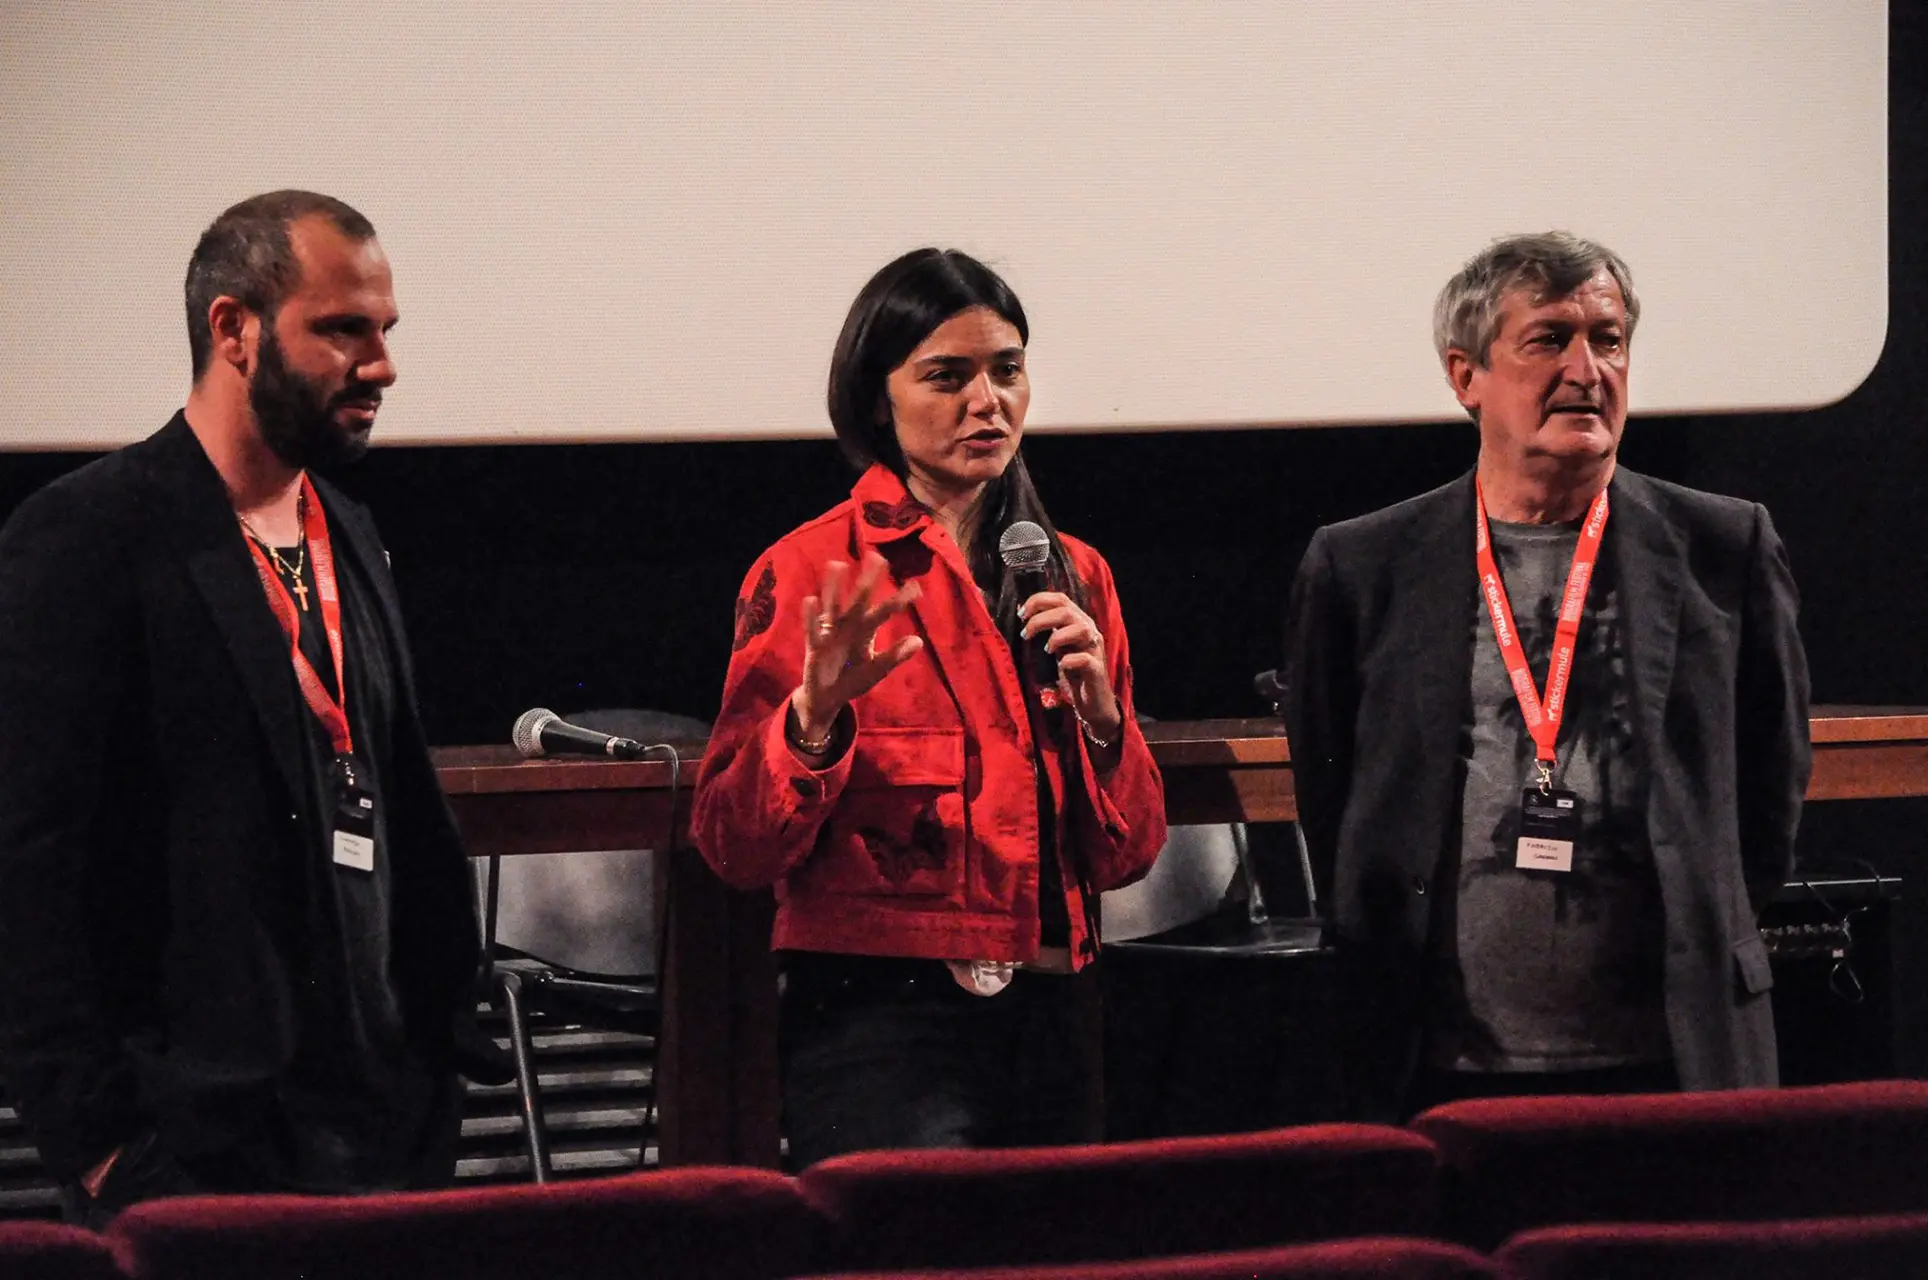 Elisa and I presenting the film at the Biografilm (2018), Bologna.